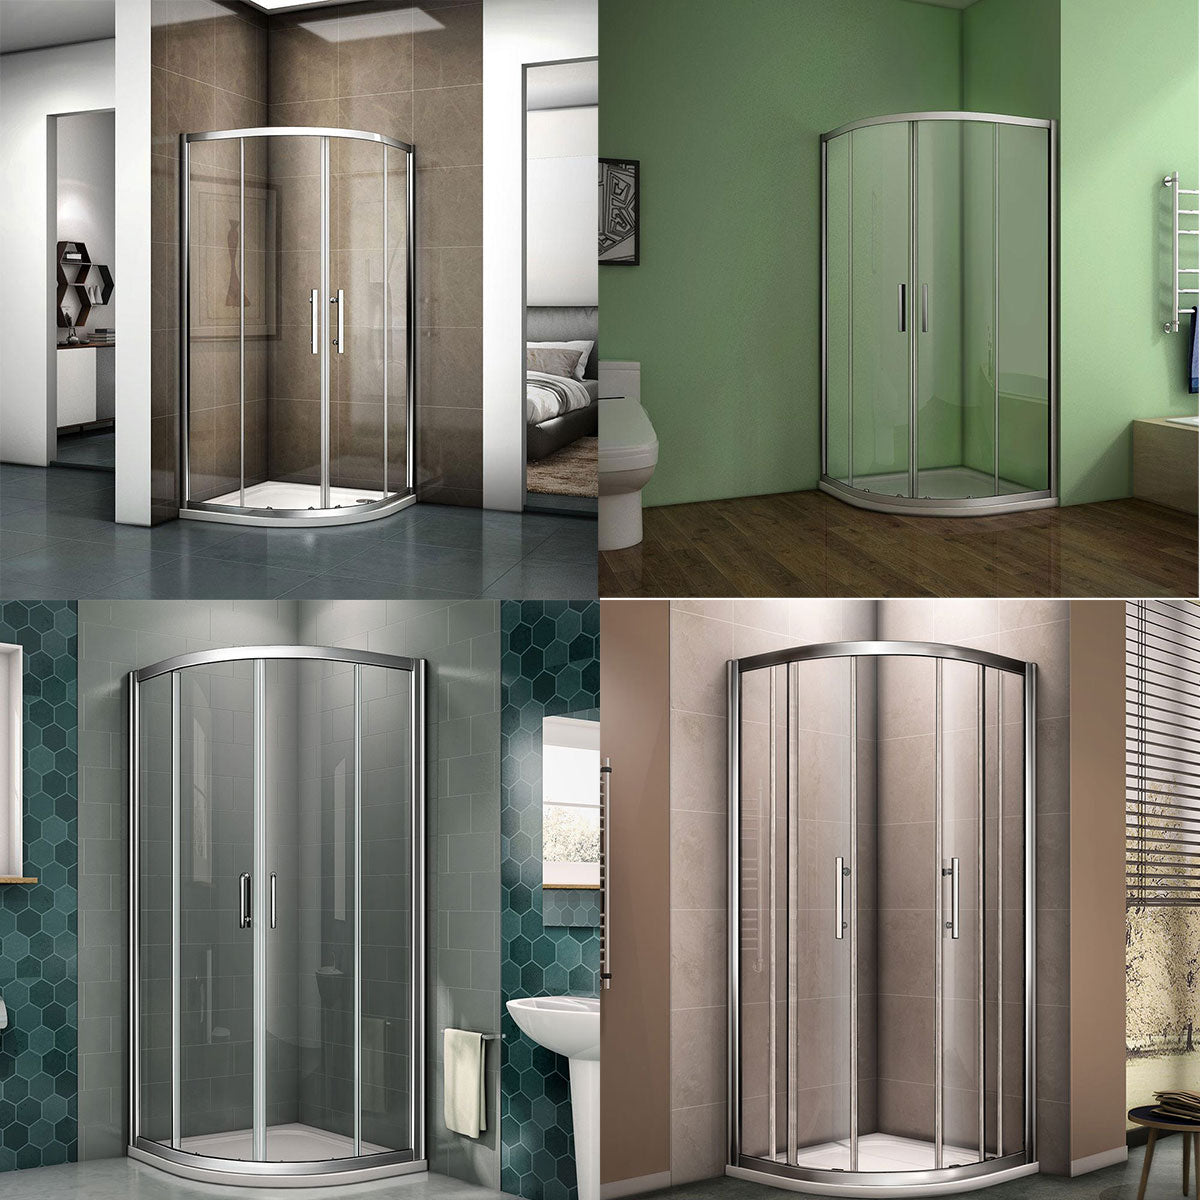 Quadrant shower, AICA shower enclosure, double sliding door